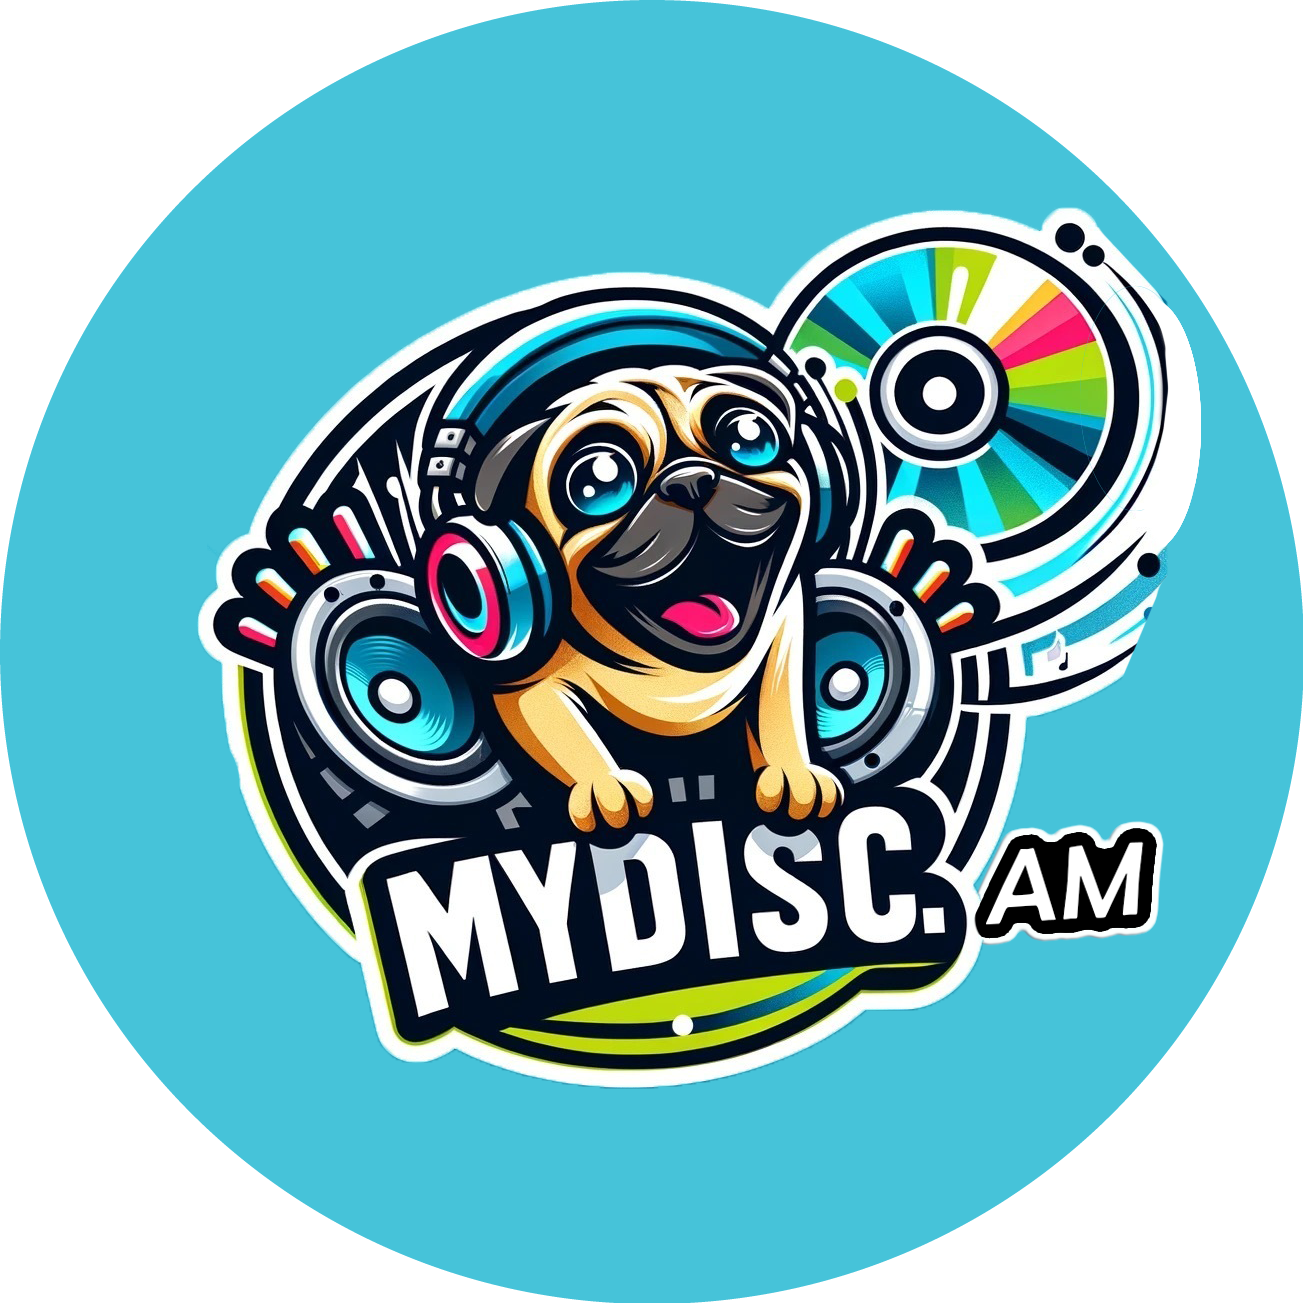 MyDisc.am logo